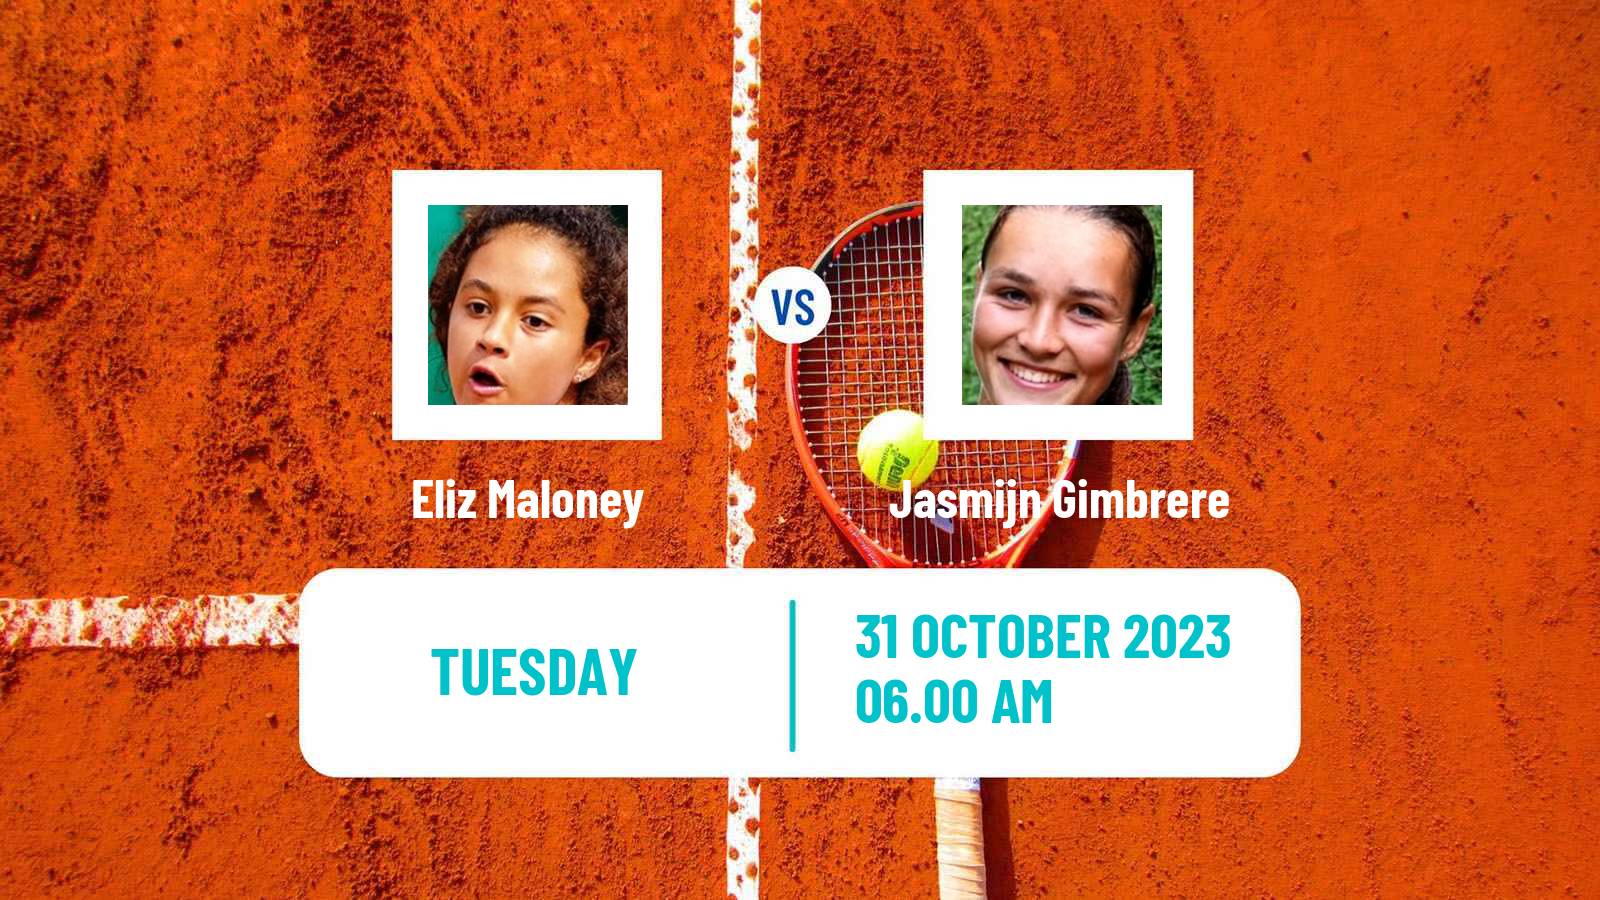 Tennis ITF W25 Sunderland Women Eliz Maloney - Jasmijn Gimbrere